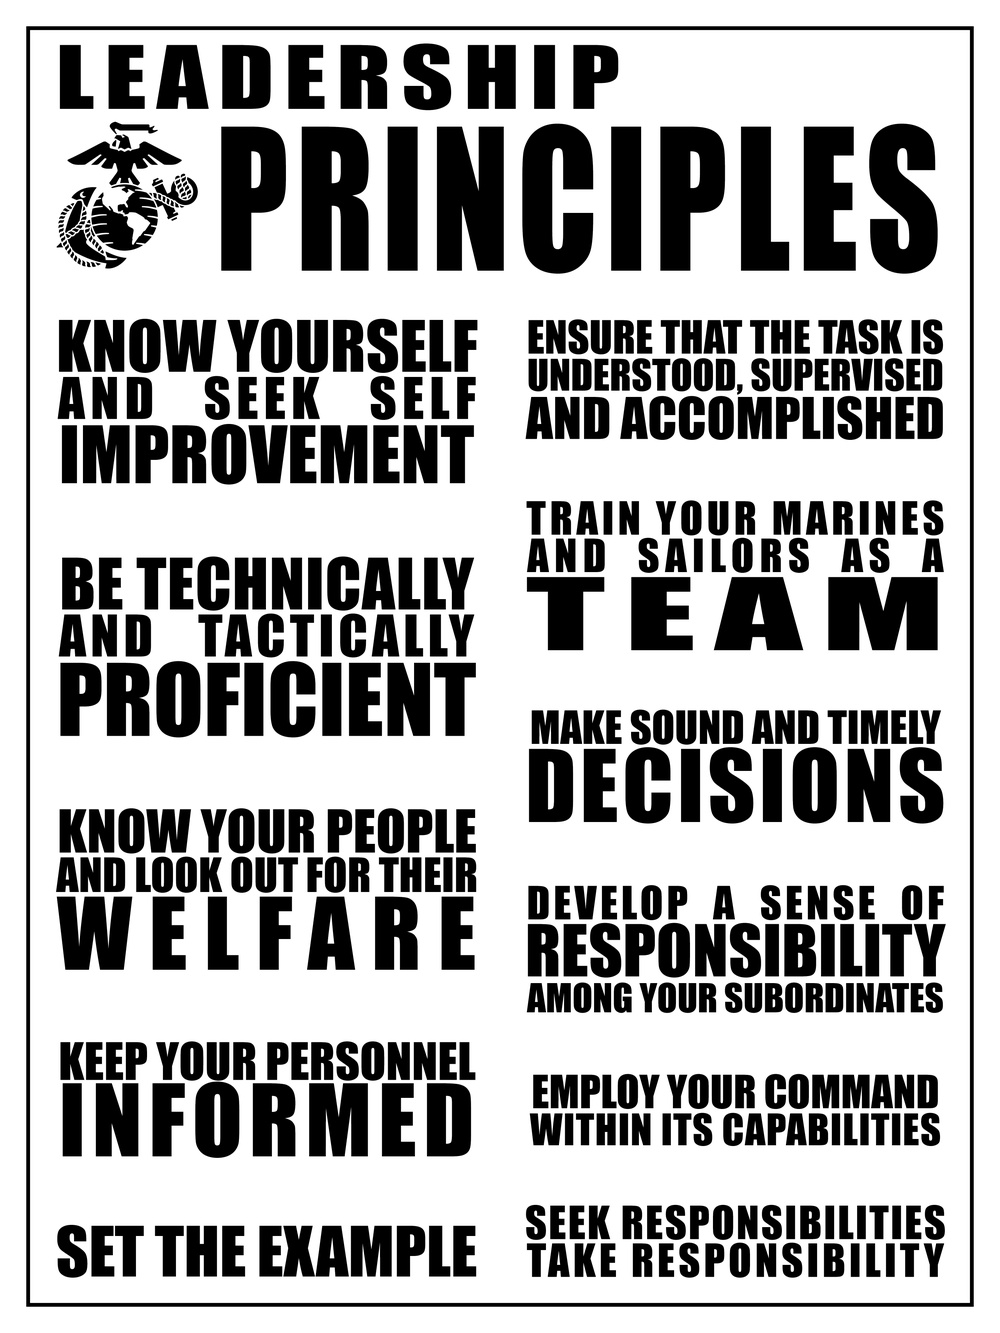 USMC Leadership Principles